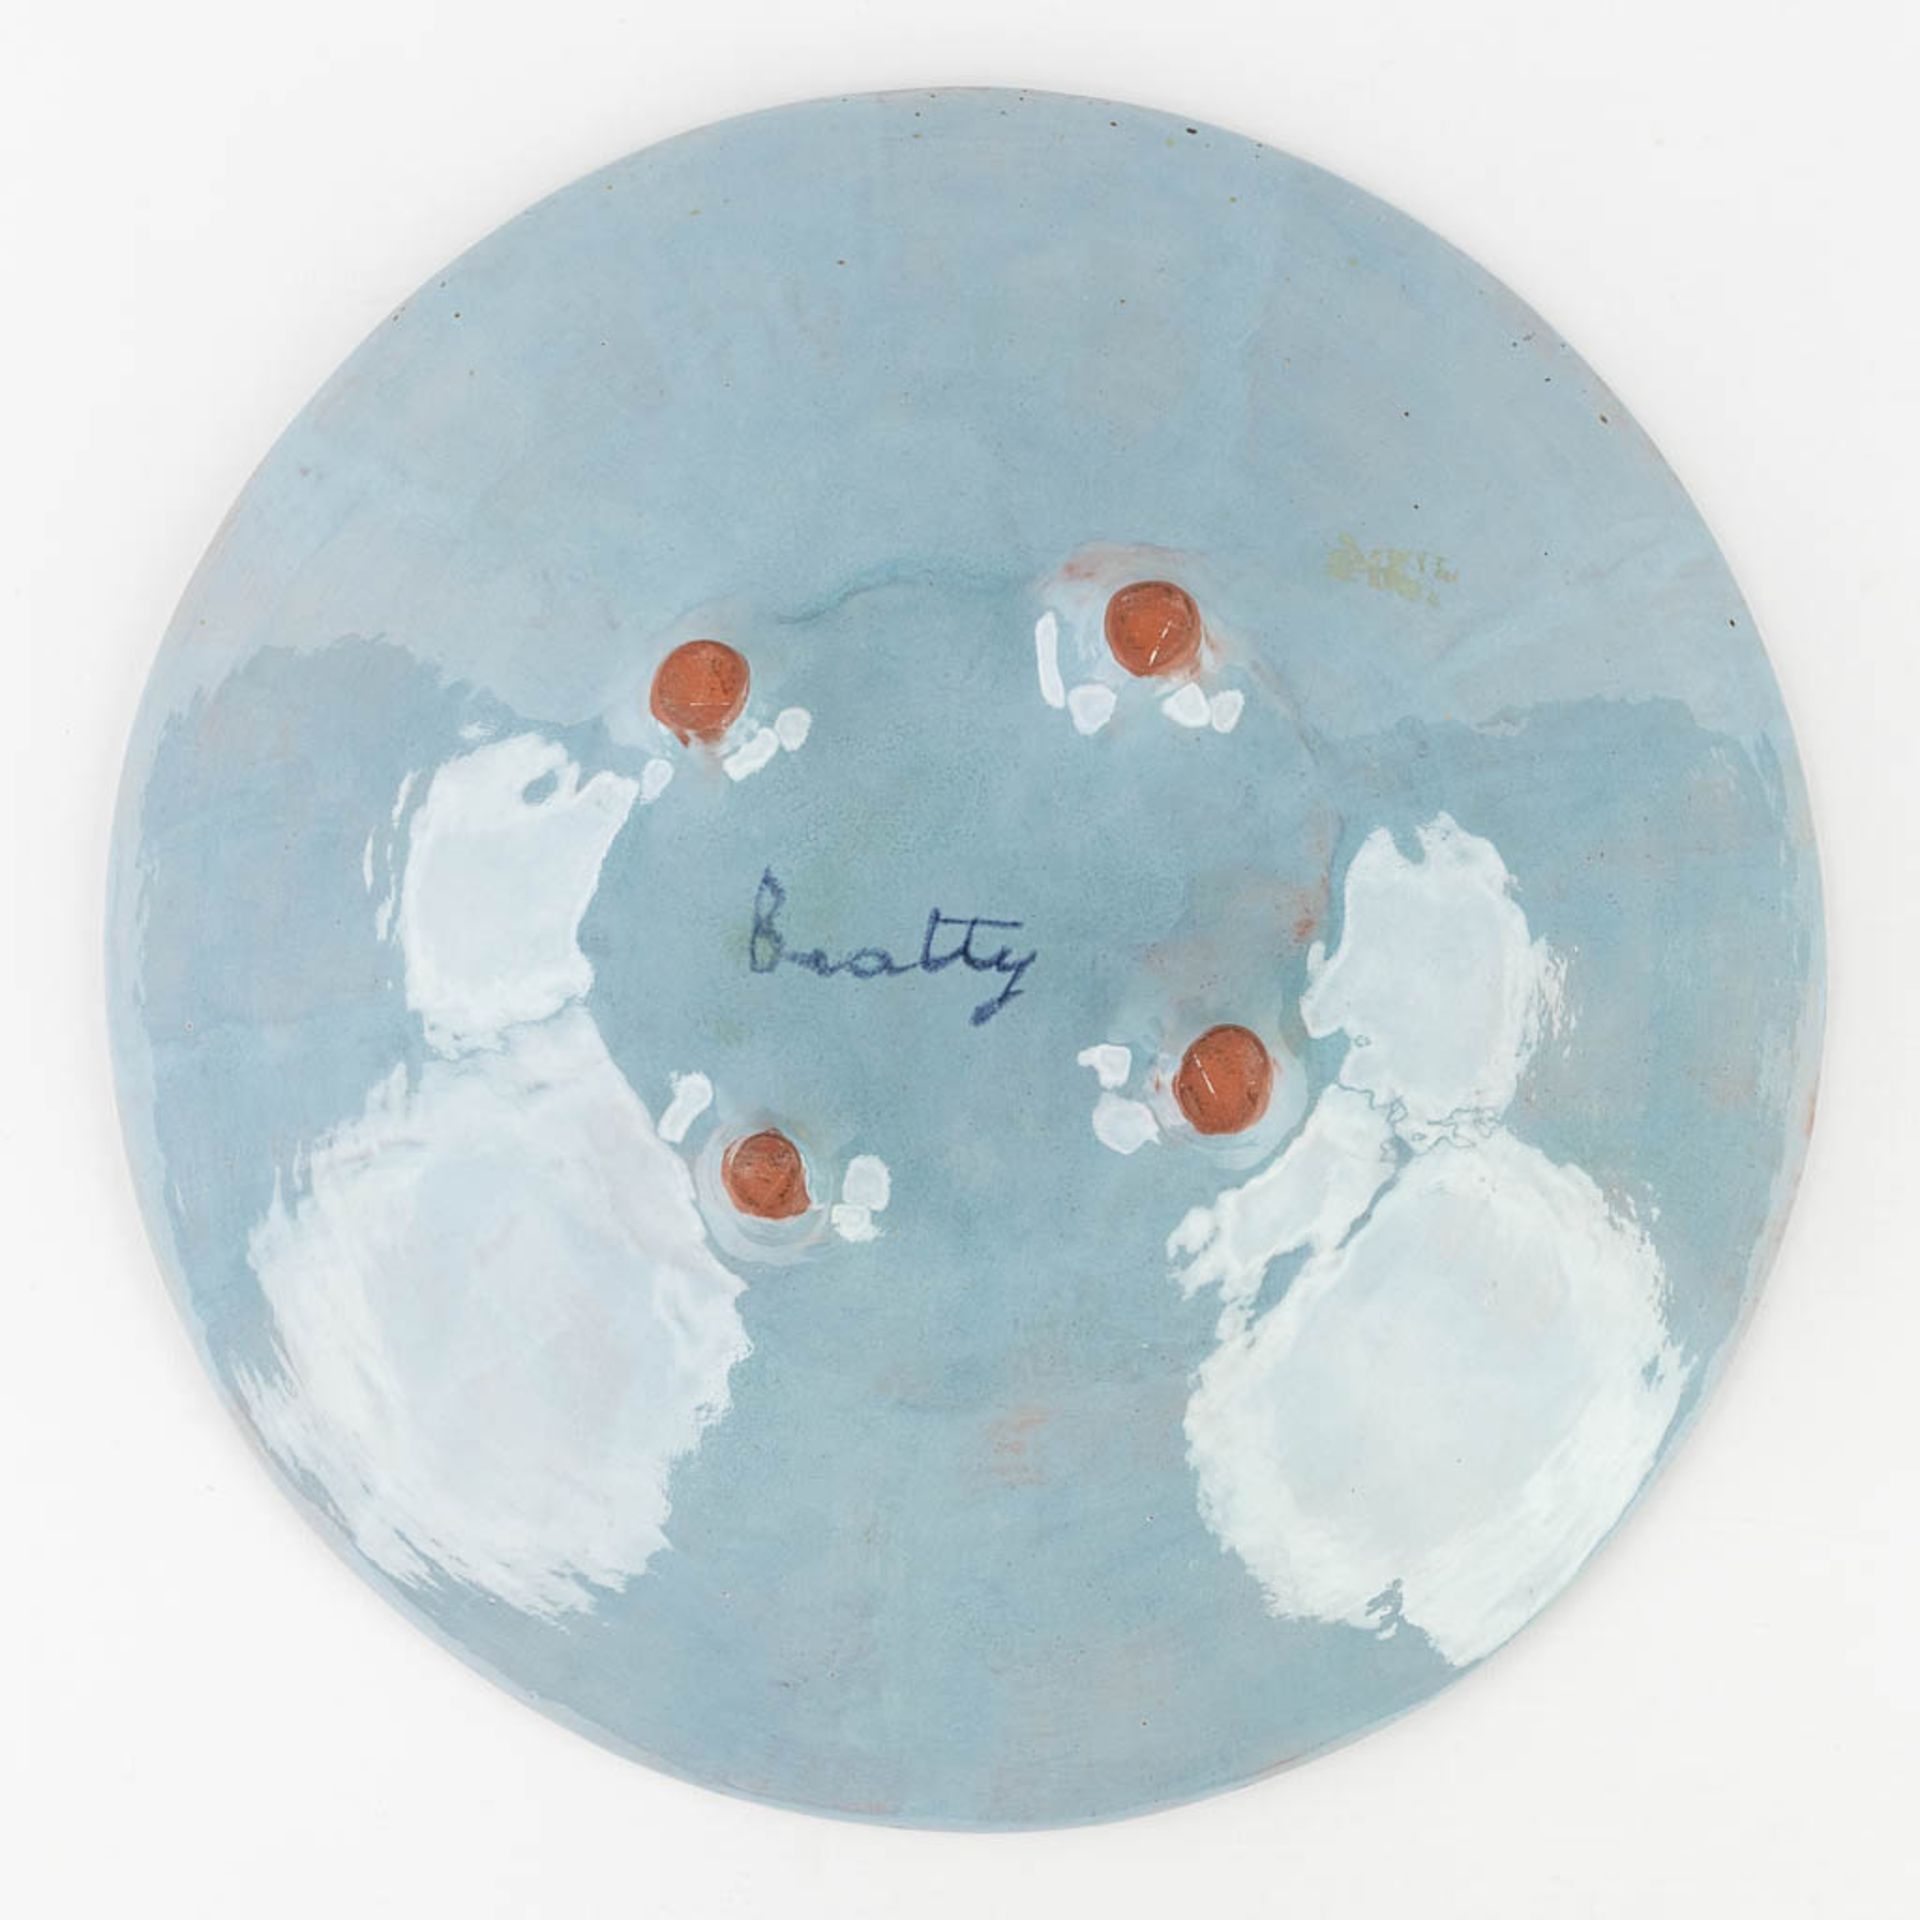 Beatty PERMEKE (1916-1991) 'Bowl' glazed ceramics. (H:8 x D:33,5 cm) - Image 9 of 10